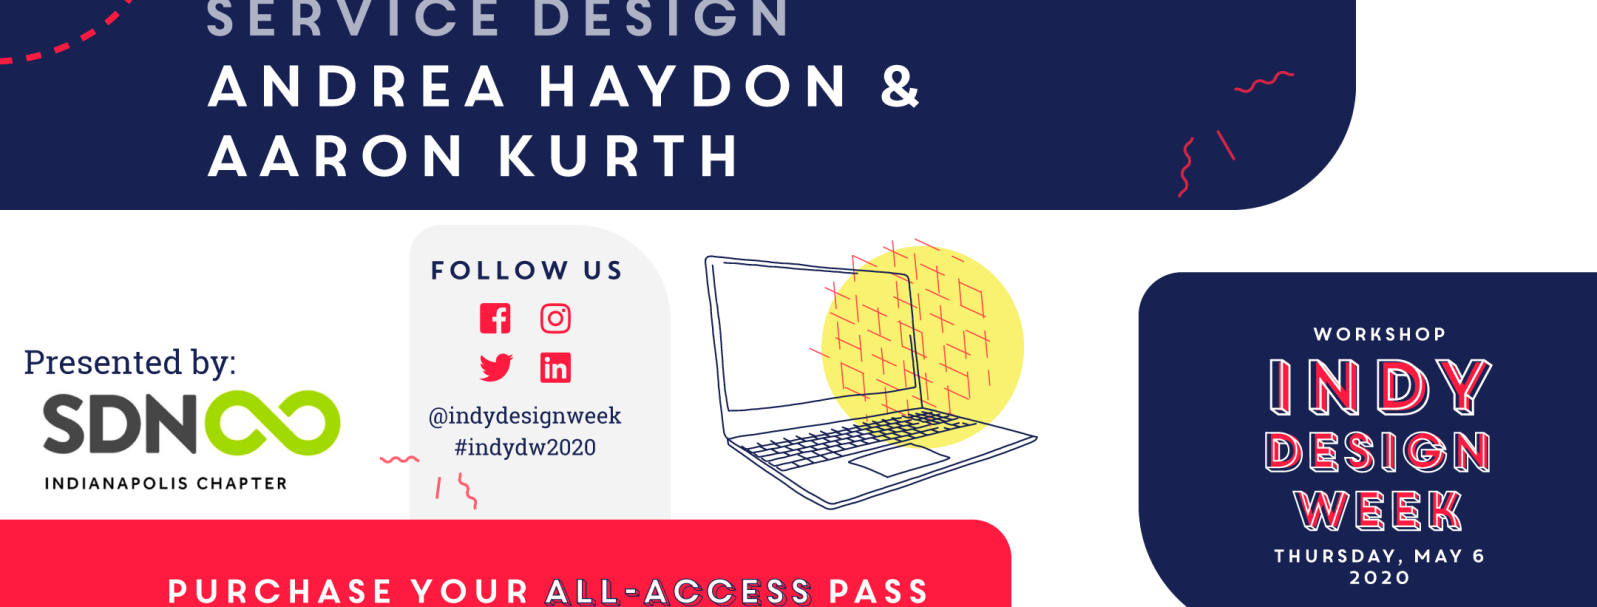 Indy Design Week 2020 | Everyday Service Design Virtual Workshop